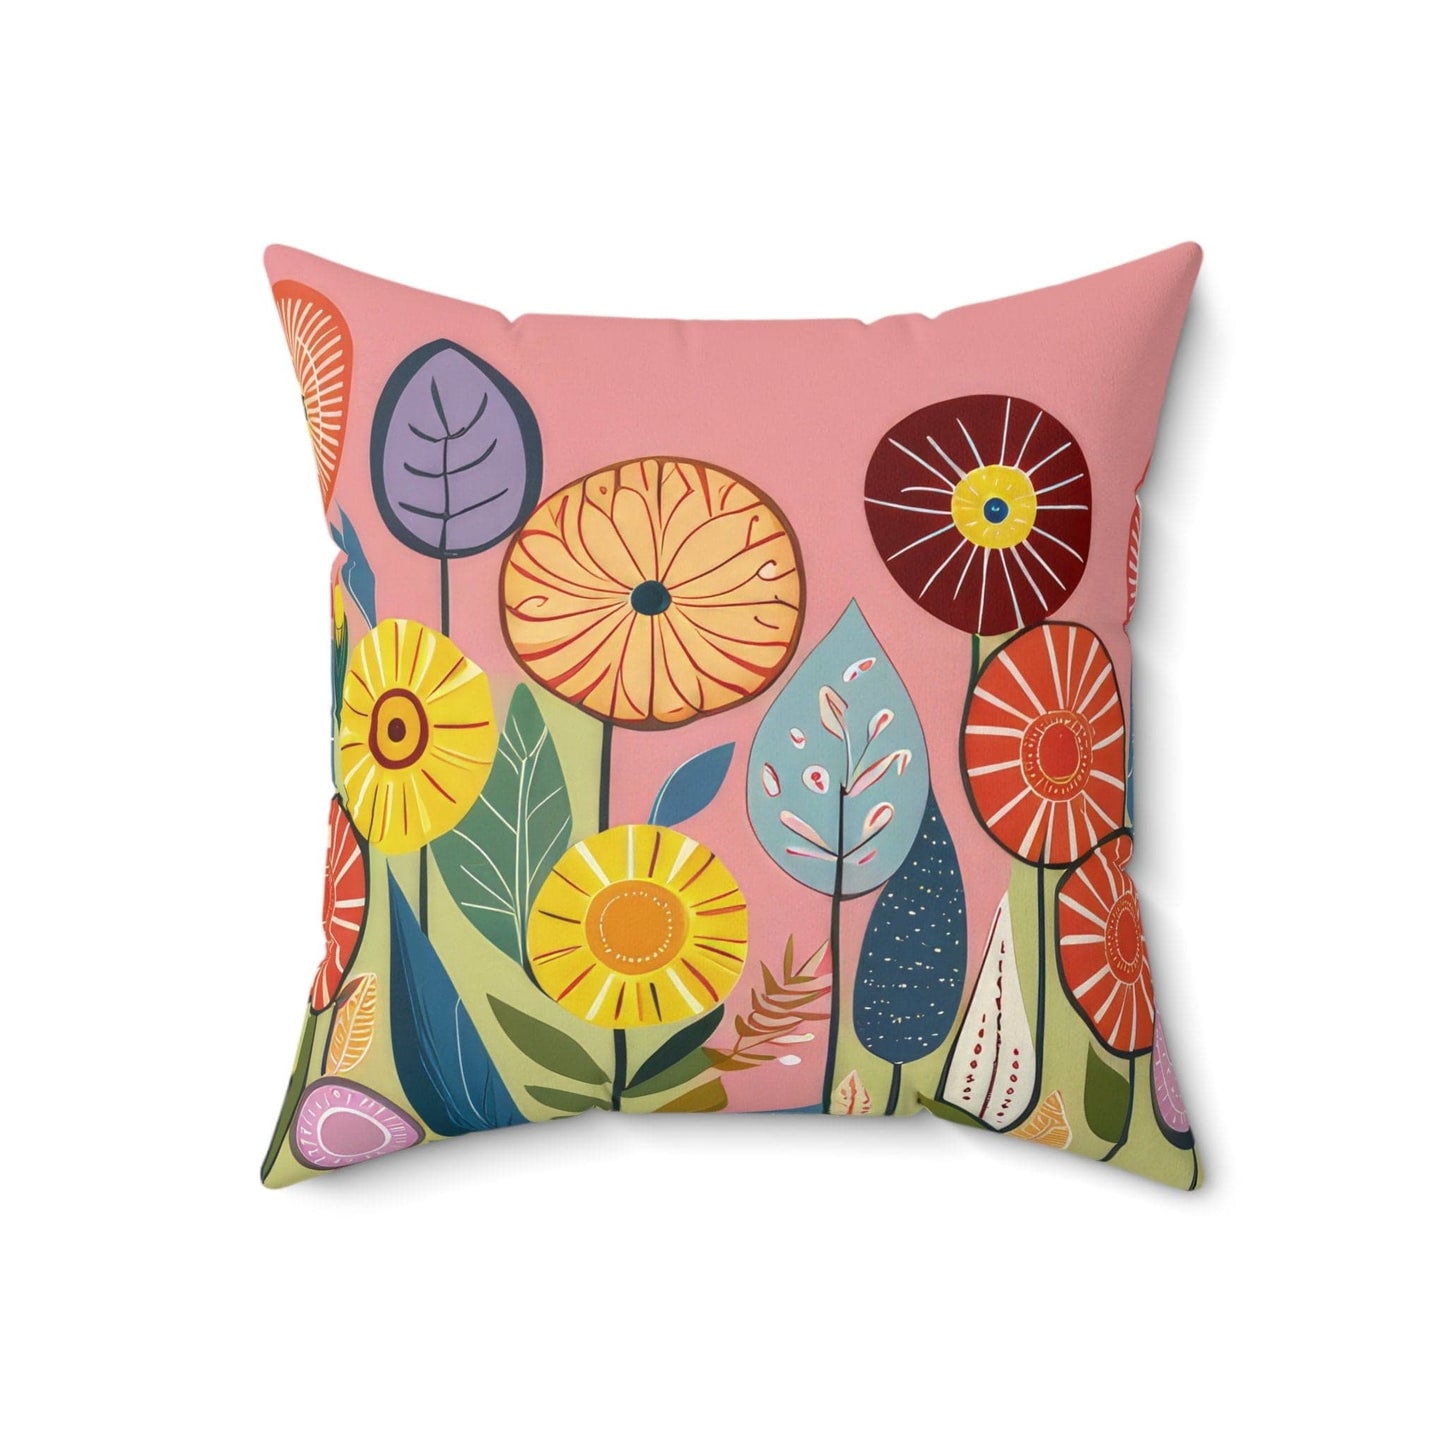 Kate McEnroe New York Boho Whimsical Floral Throw Pillow, Vibrant Folk Art Flowers on Pink Accent Pillow, Cottagecore Living Room, Bedroom Decor Throw Pillows